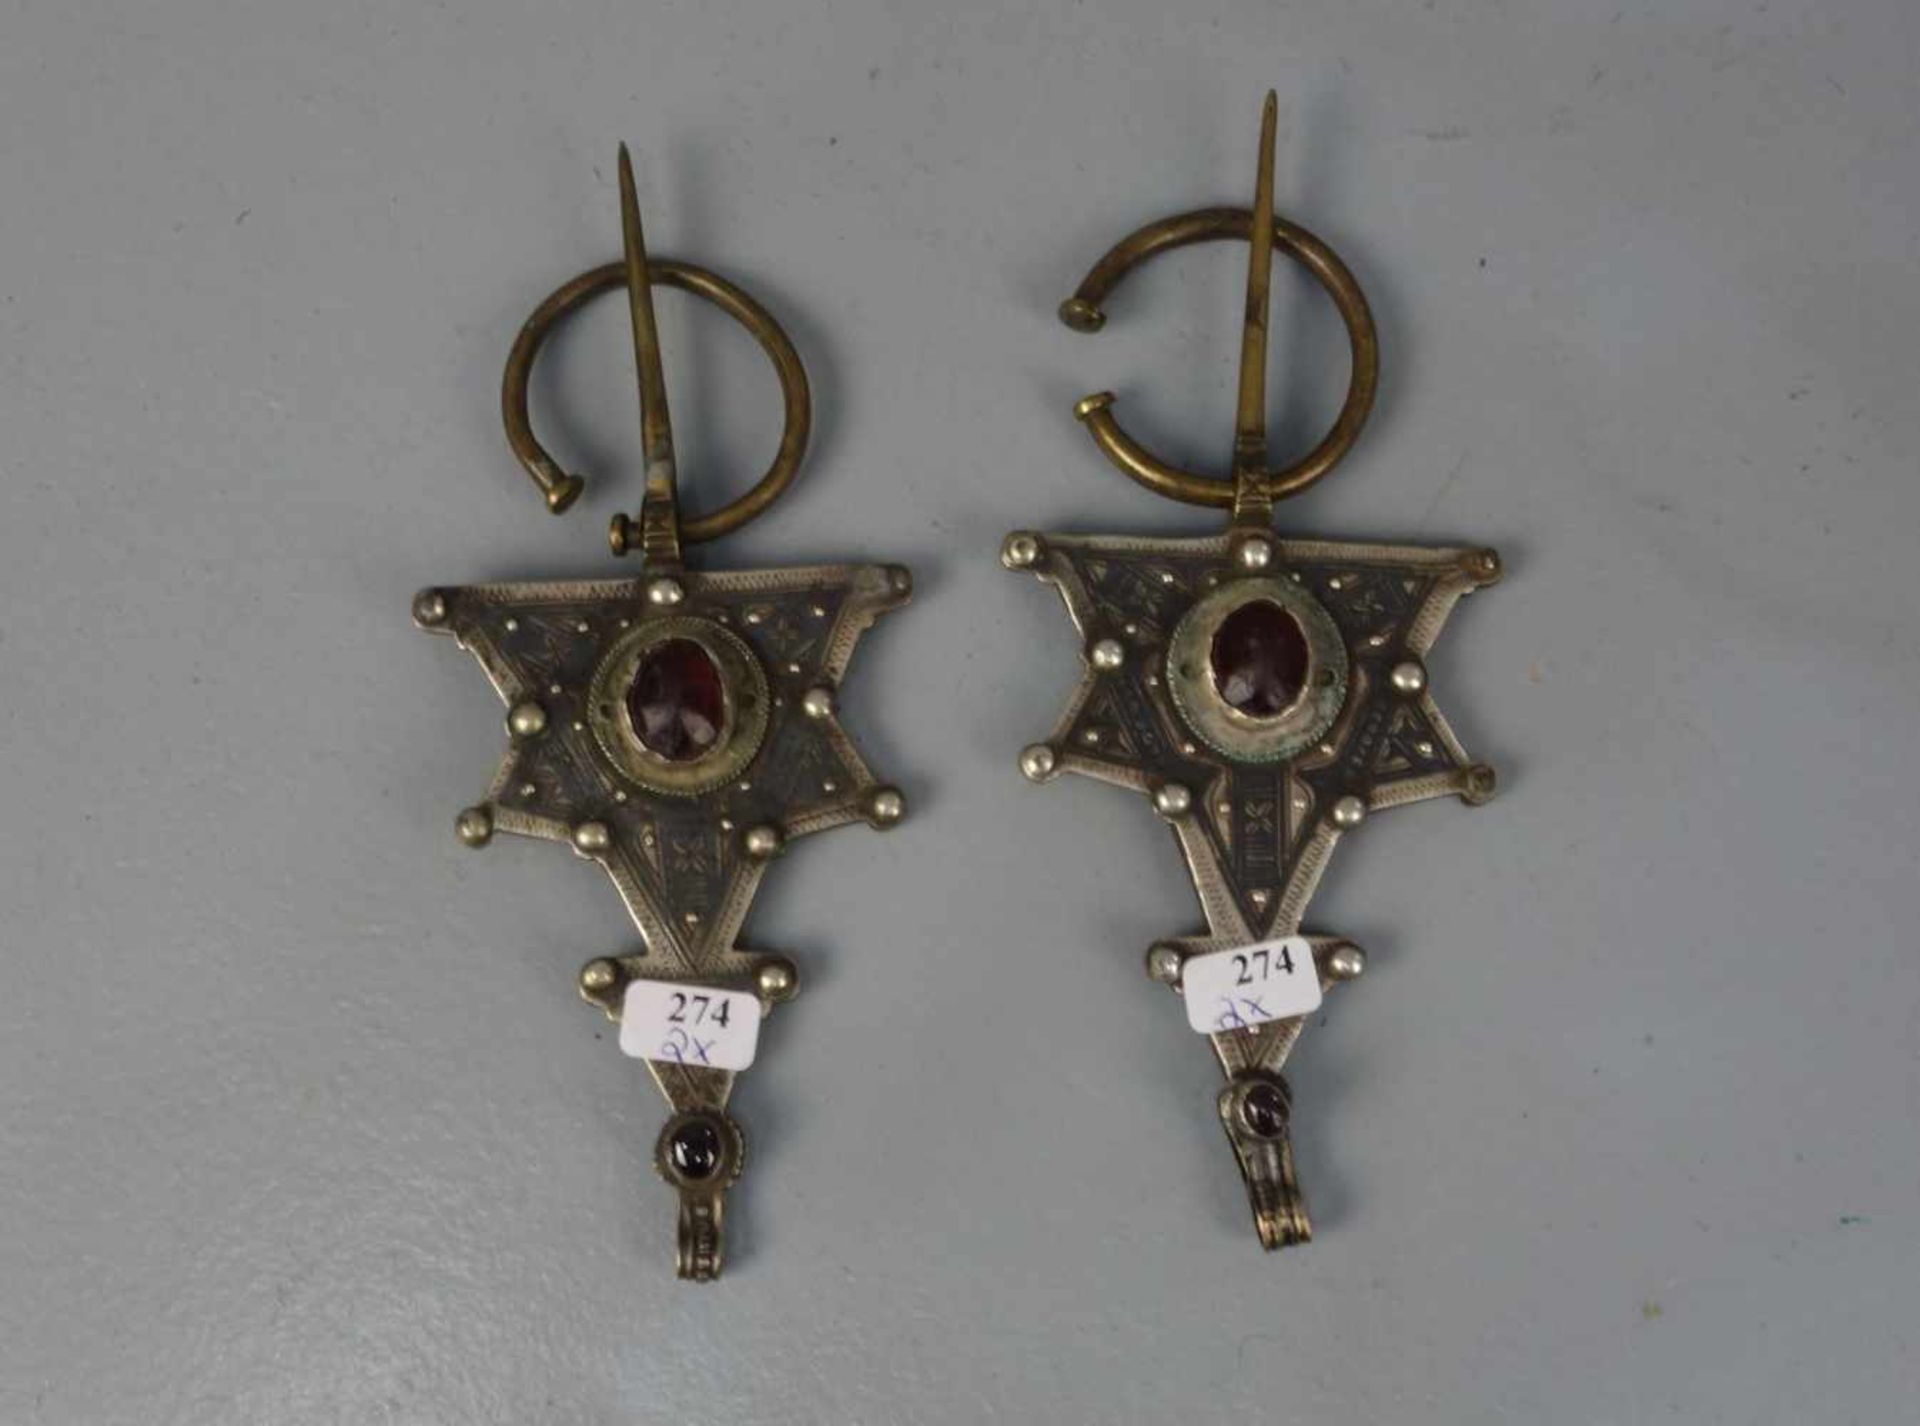 BERBER-SCHMUCK: FIBELPAAR / oriental accessoires, Taroudannt / Marokko, Leder, Silber und